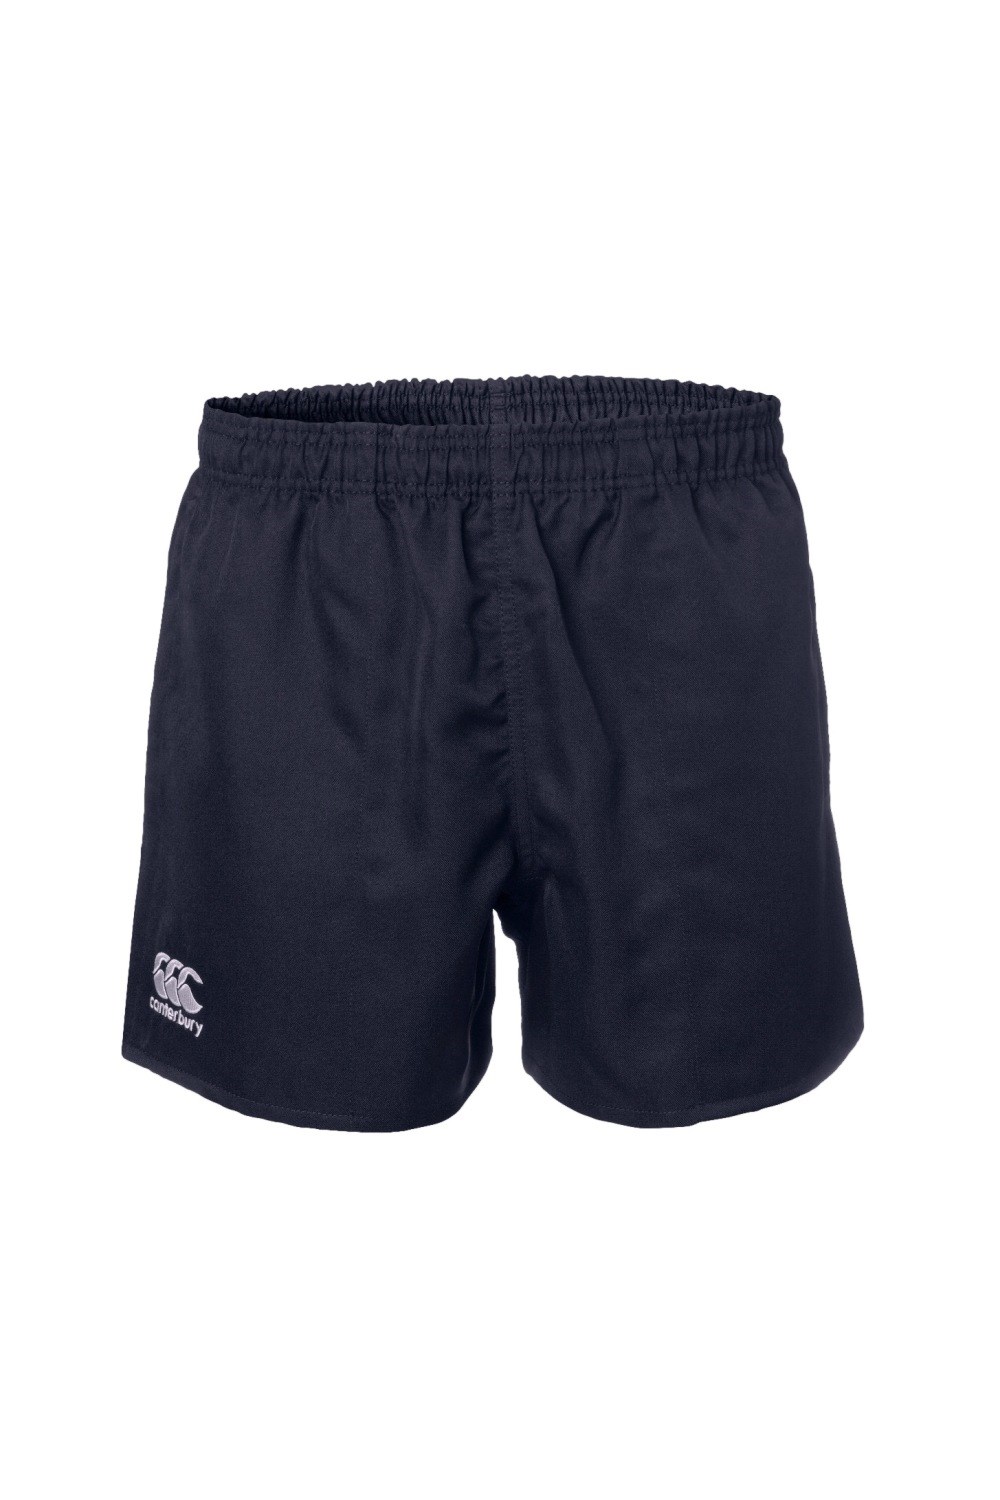 Mens Professional Elasticated Sports Shorts -